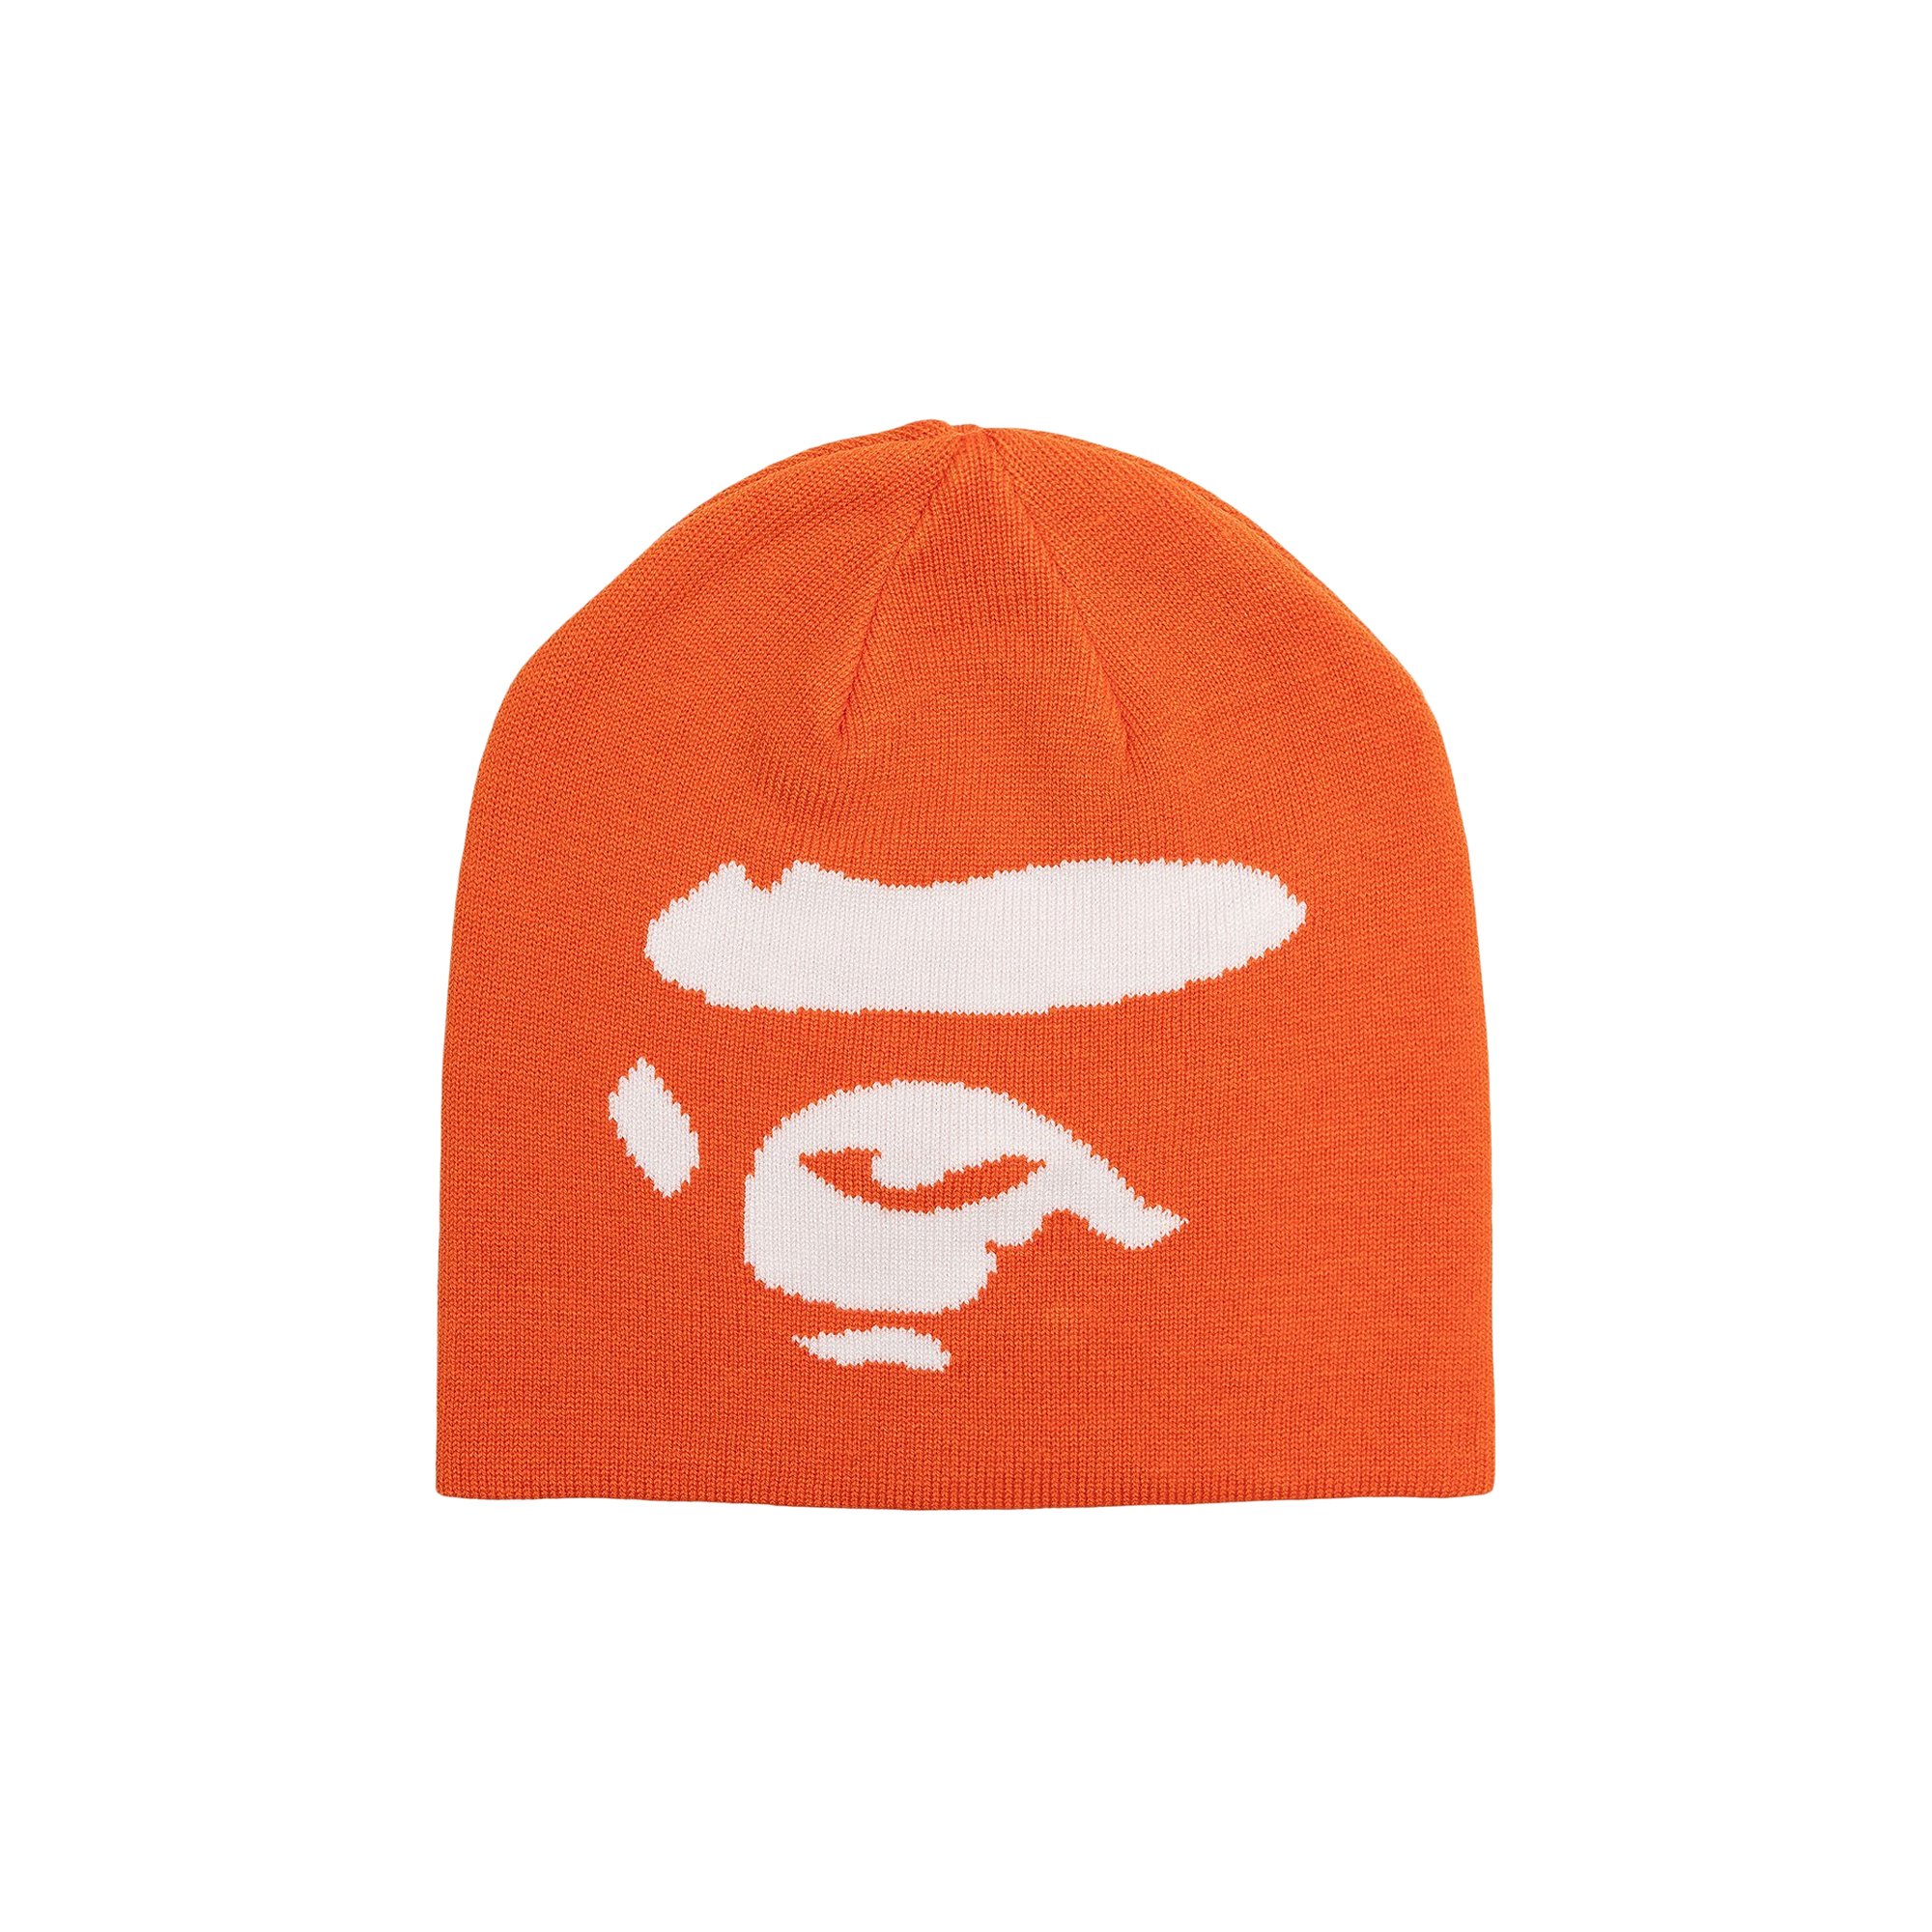 Buy BAPE Ape Face Knit Cap 'Orange' - 1G80 180 015 ORANGE | GOAT